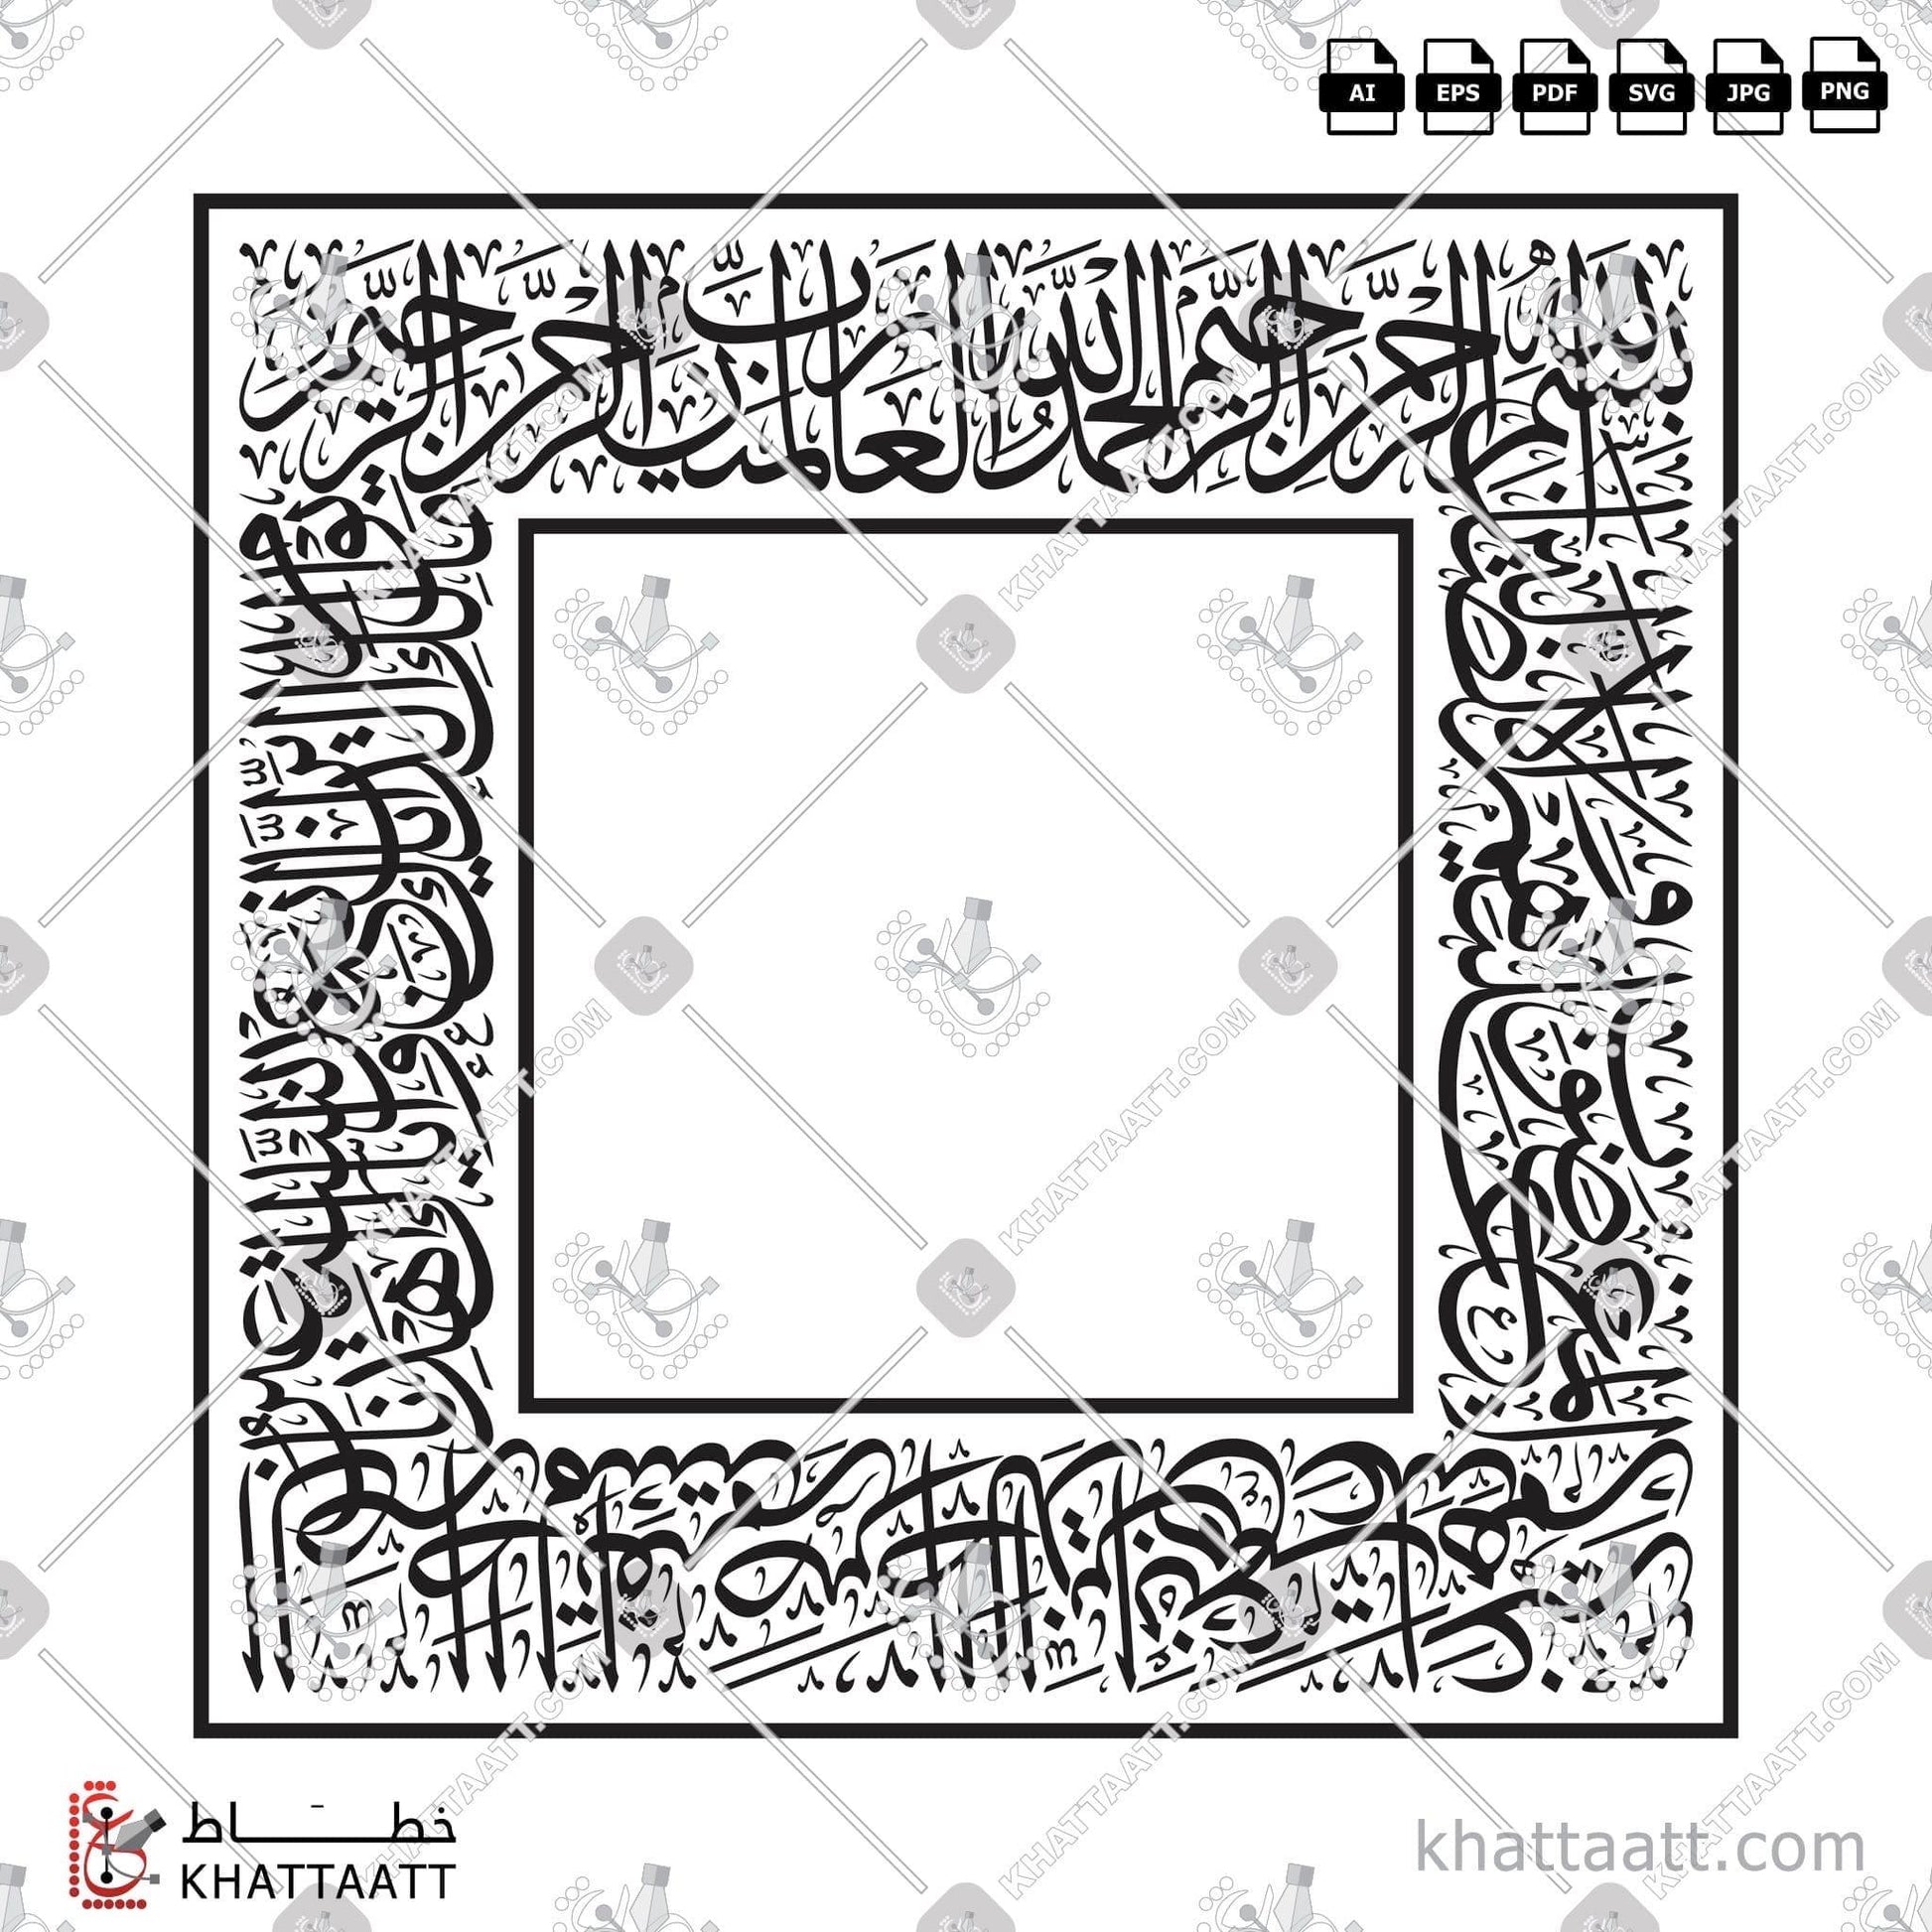 Digital Arabic calligraphy vector of Surat Al-Fatiha - سورة الفاتحة in Thuluth - خط الثلث